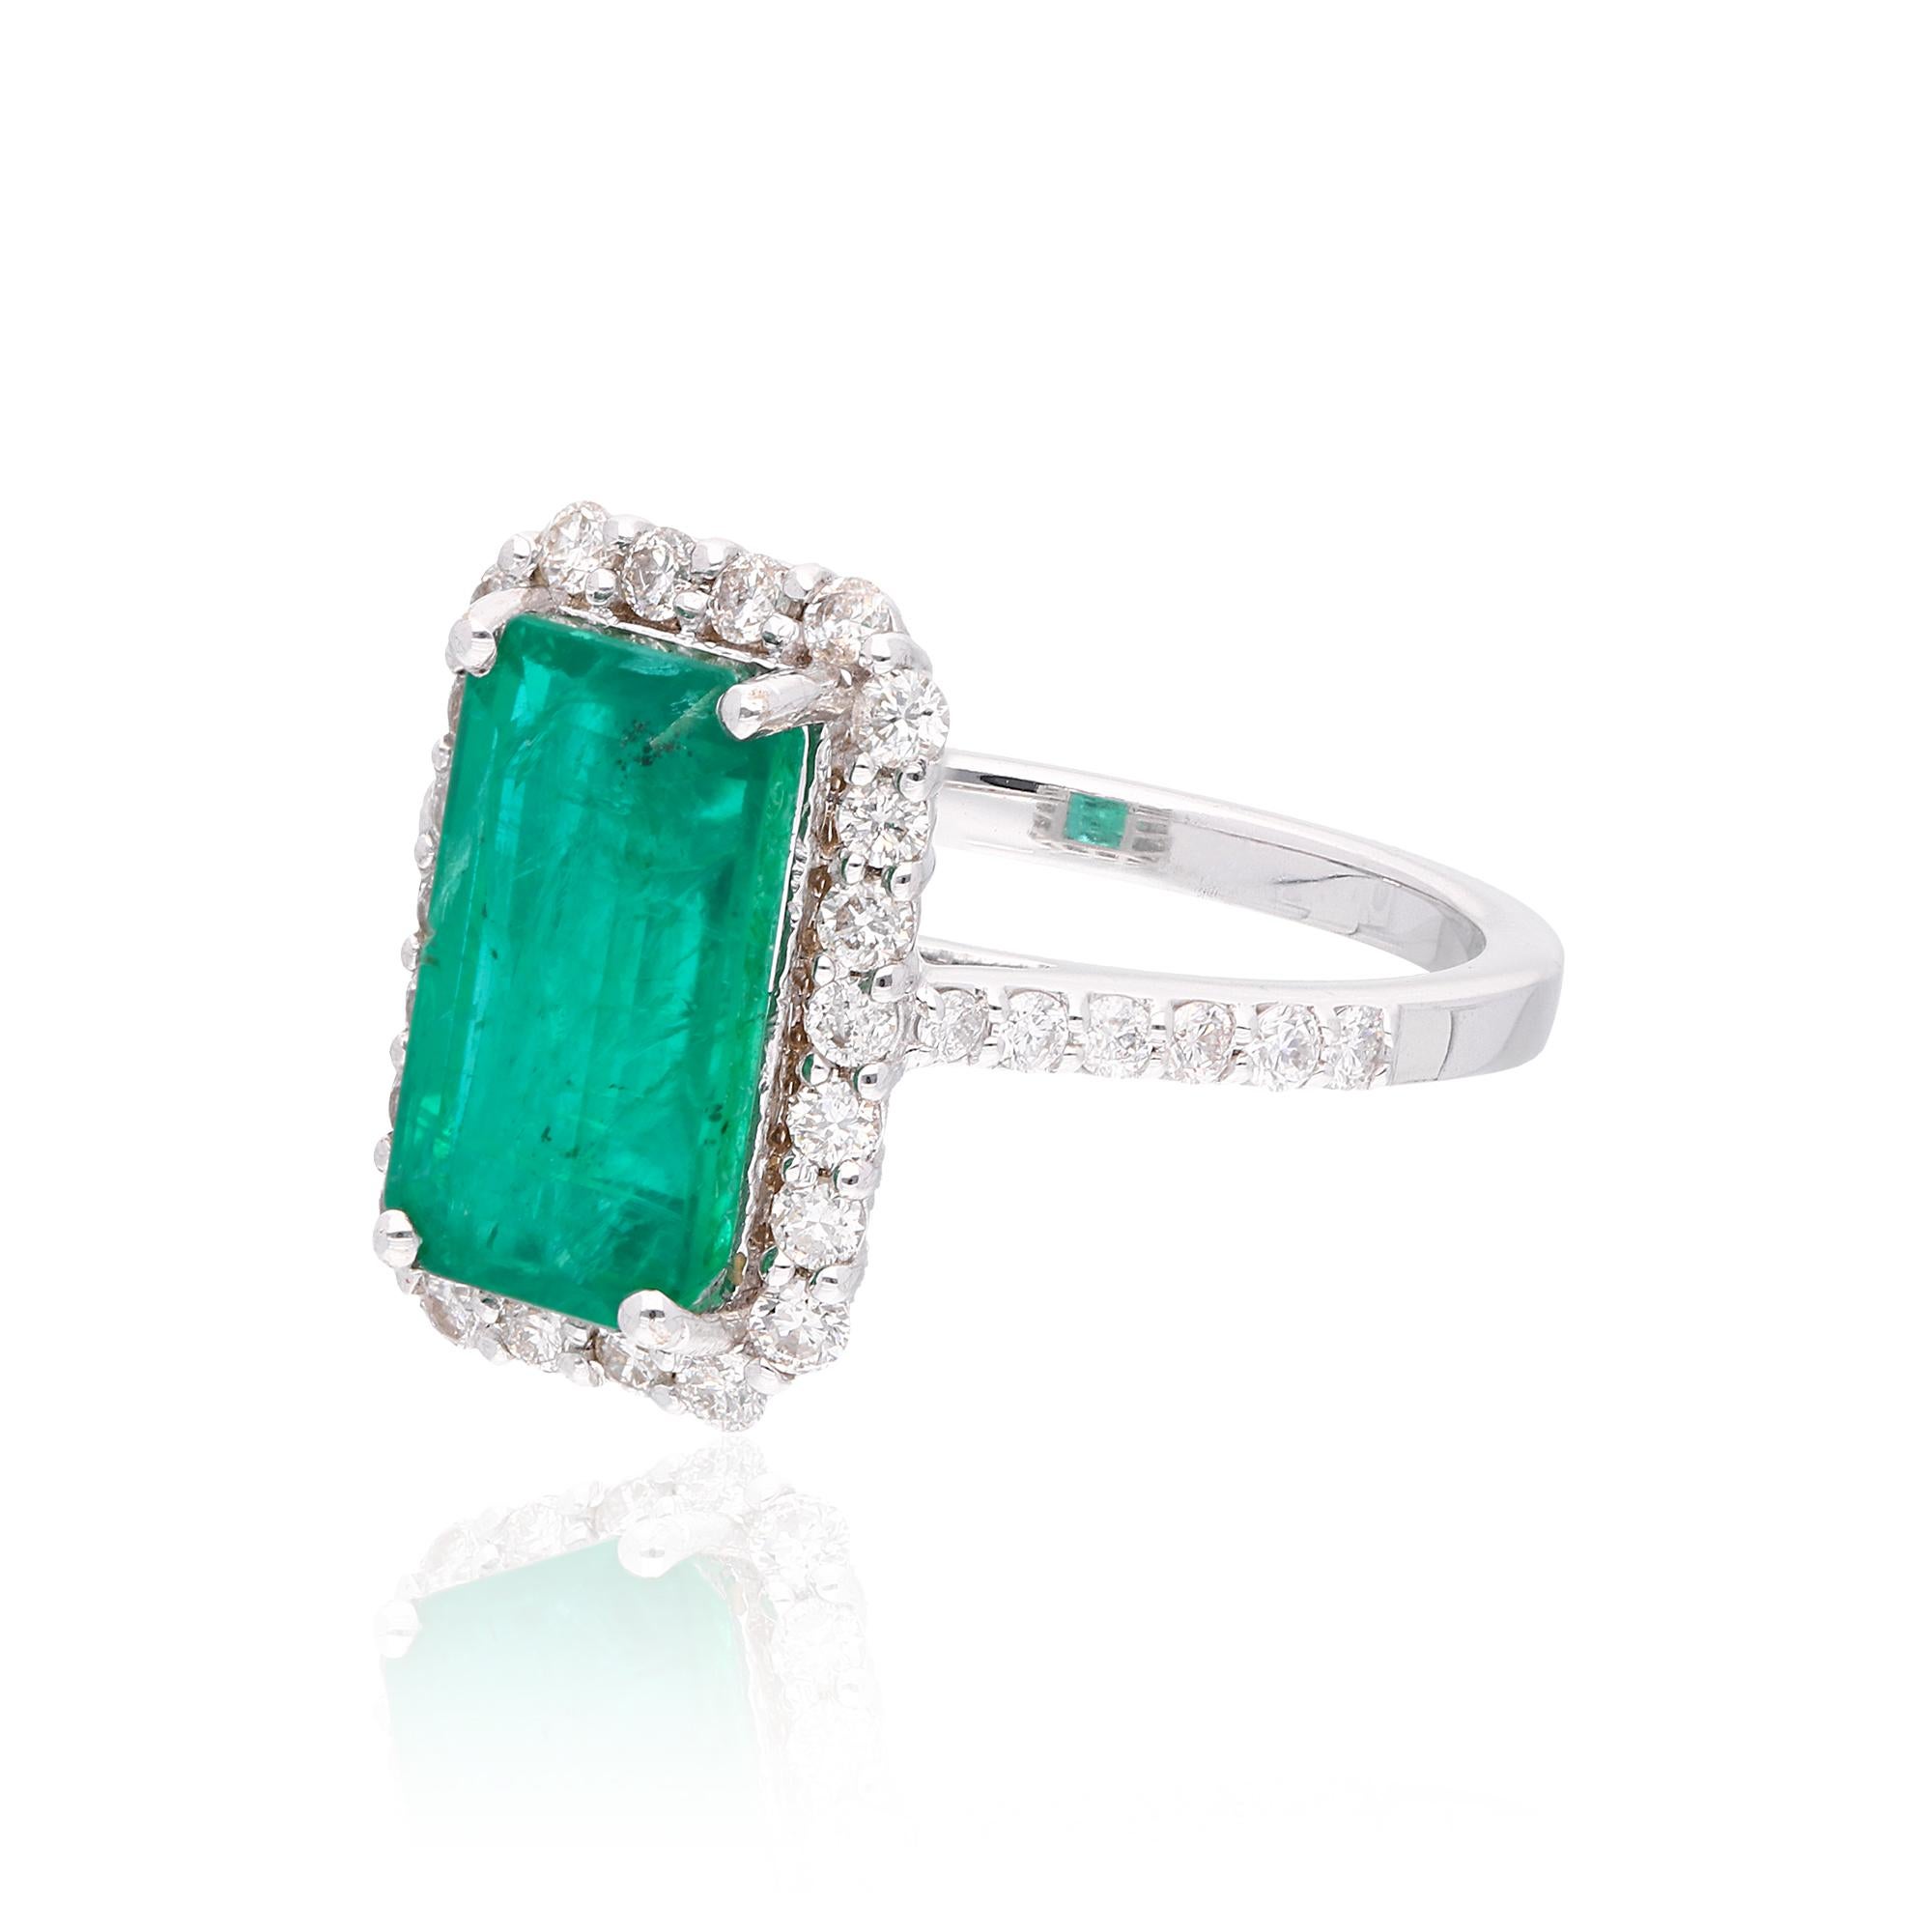 For Sale:  Natural Emerald Gemstone Ring SI Clarity HI Color Diamond 18 Karat White Gold 2